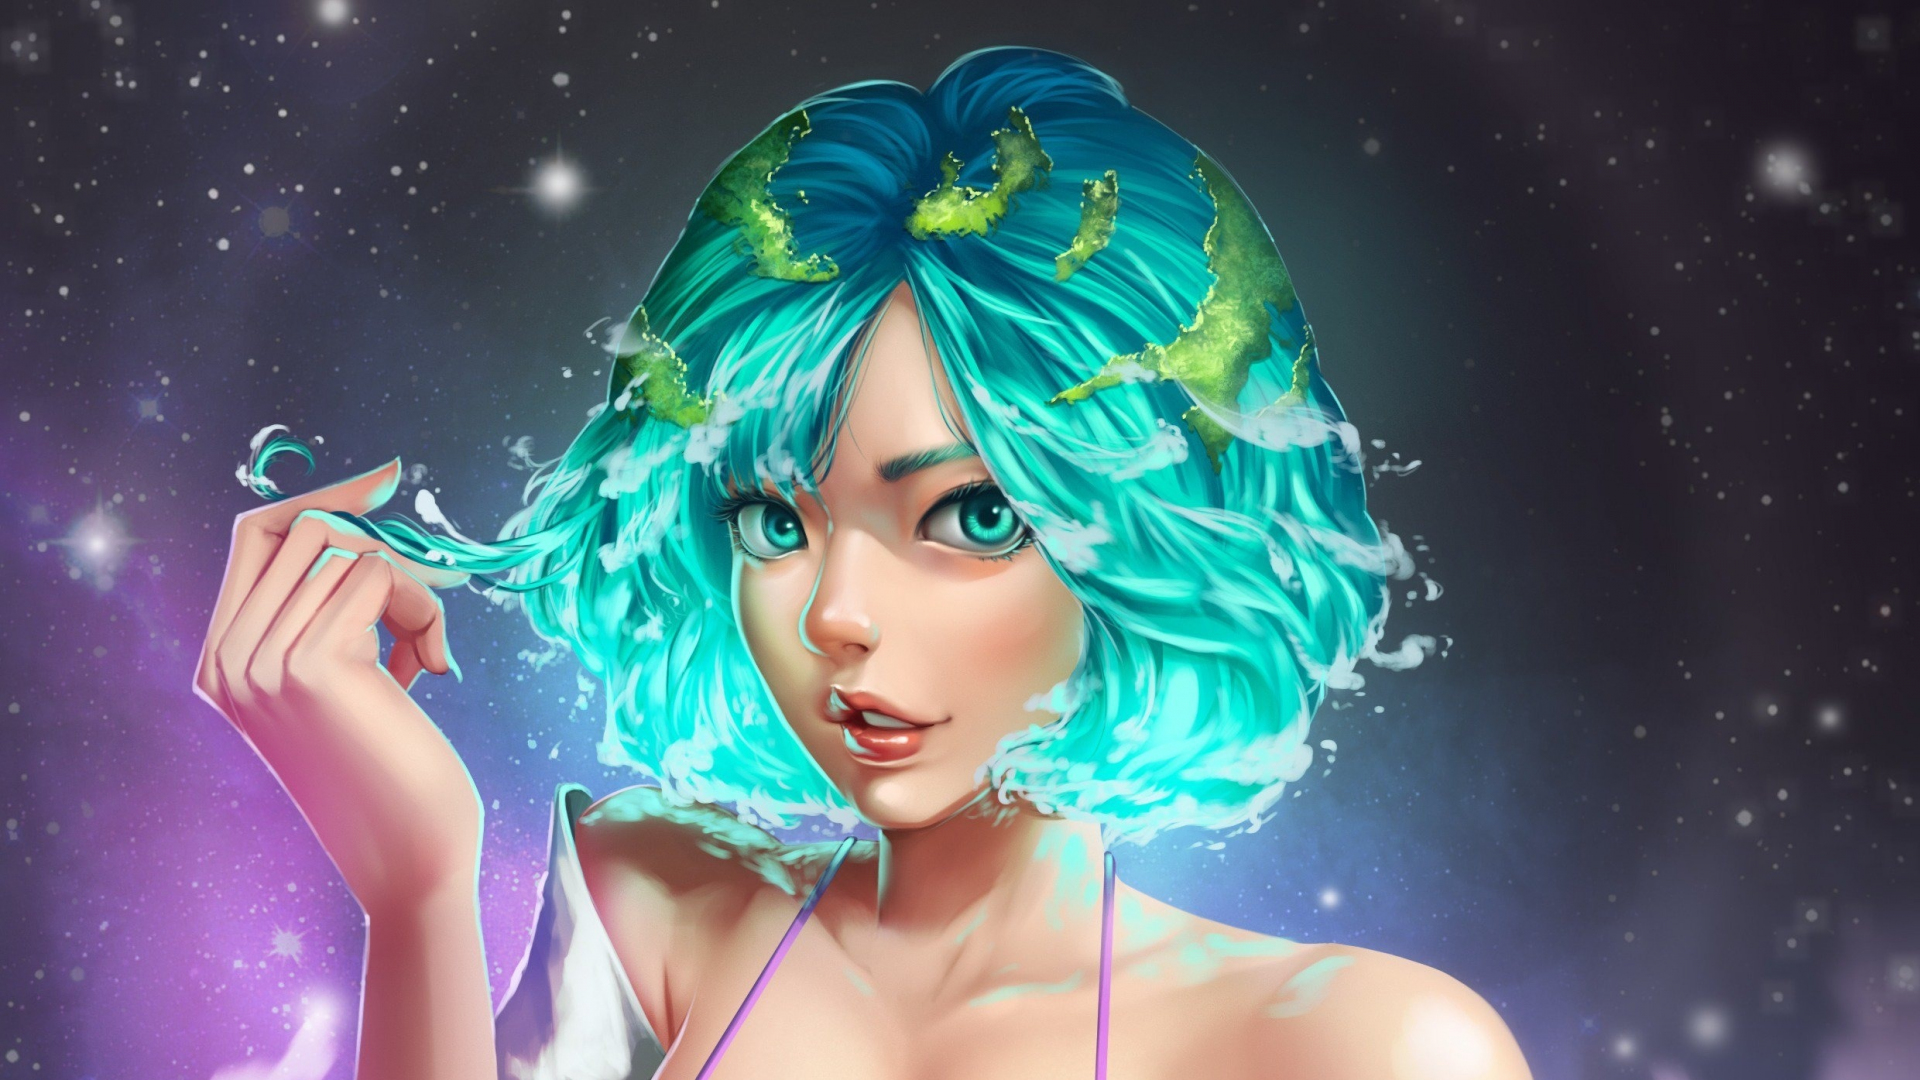 Download Blue Short Hair Anime Girl Digital Art 1920x1080 Wallpaper Full Hd Hdtv Fhd 1309